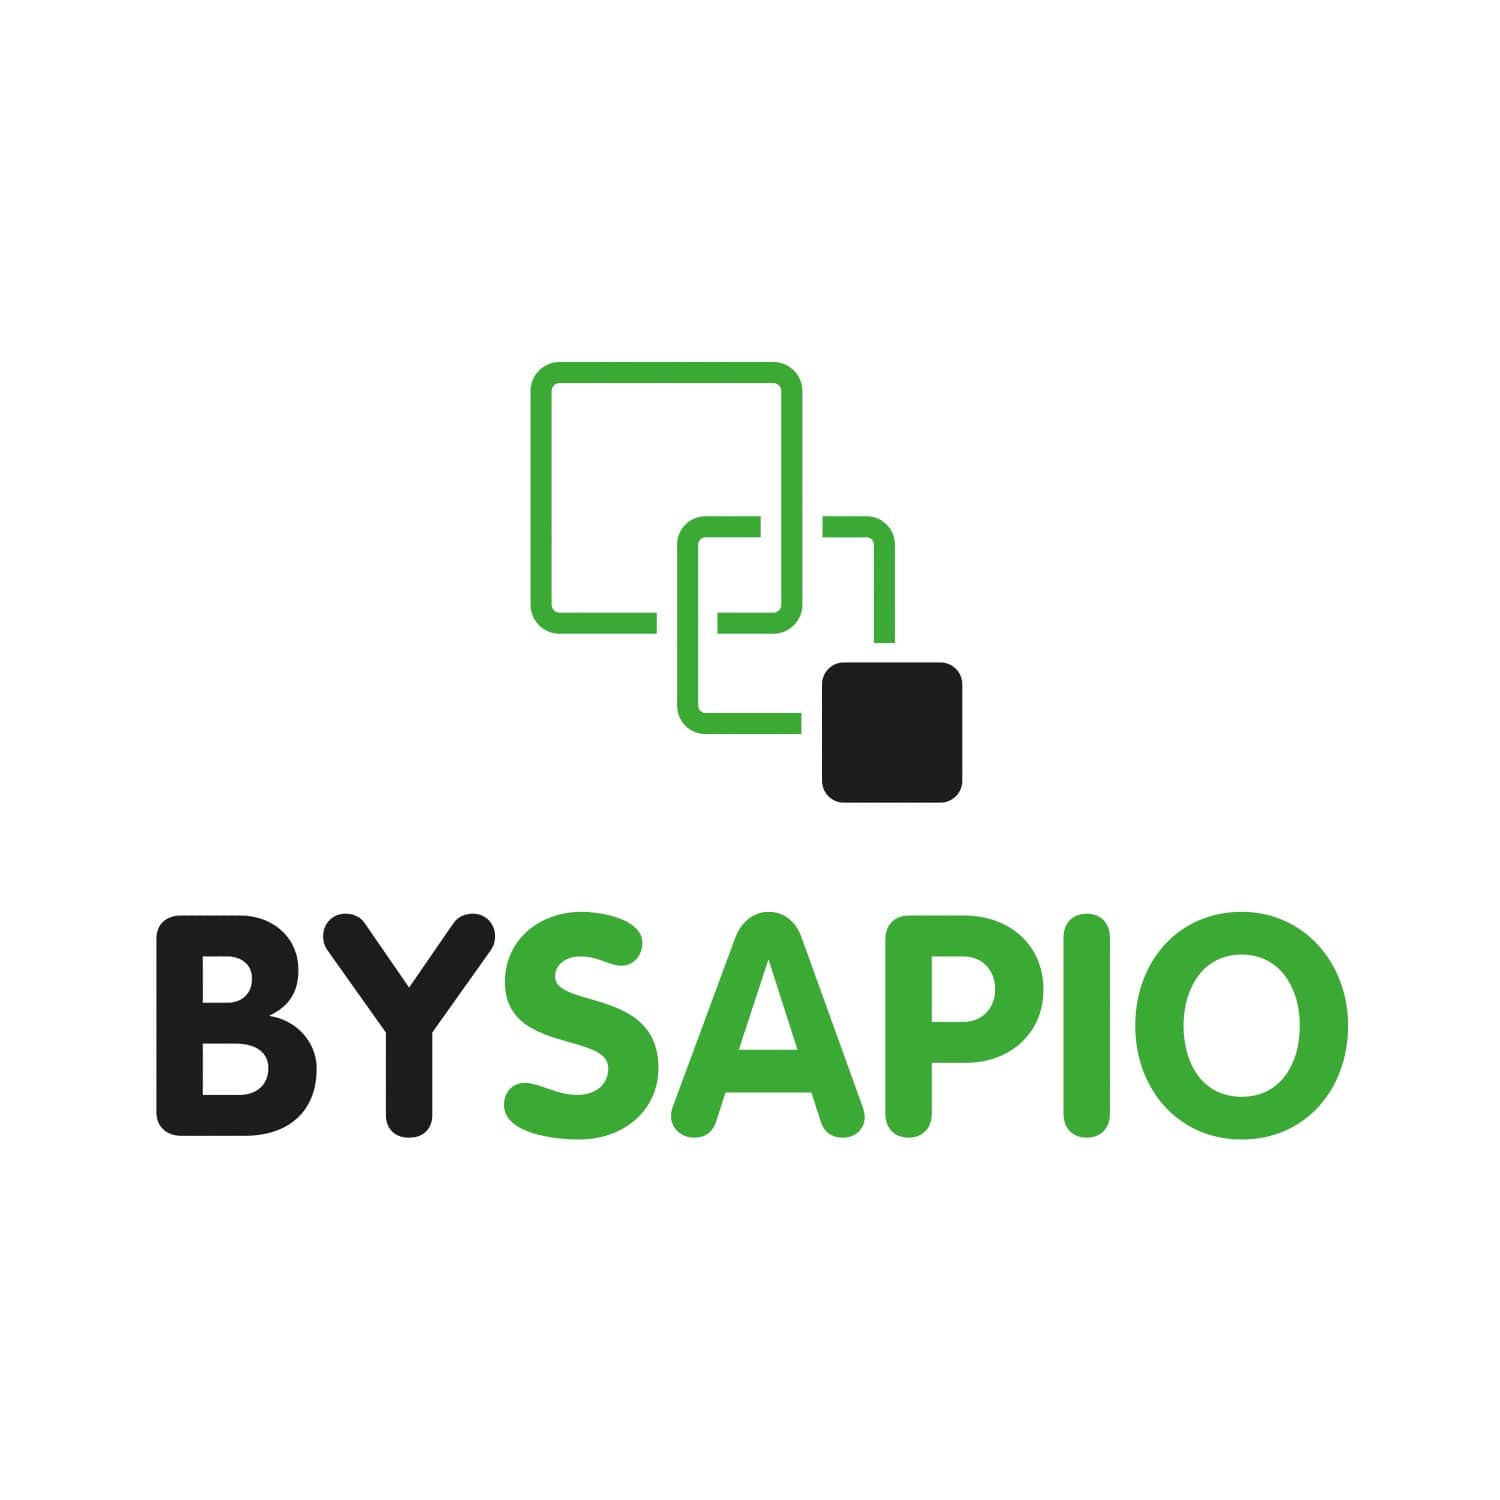 Bysapio logo.